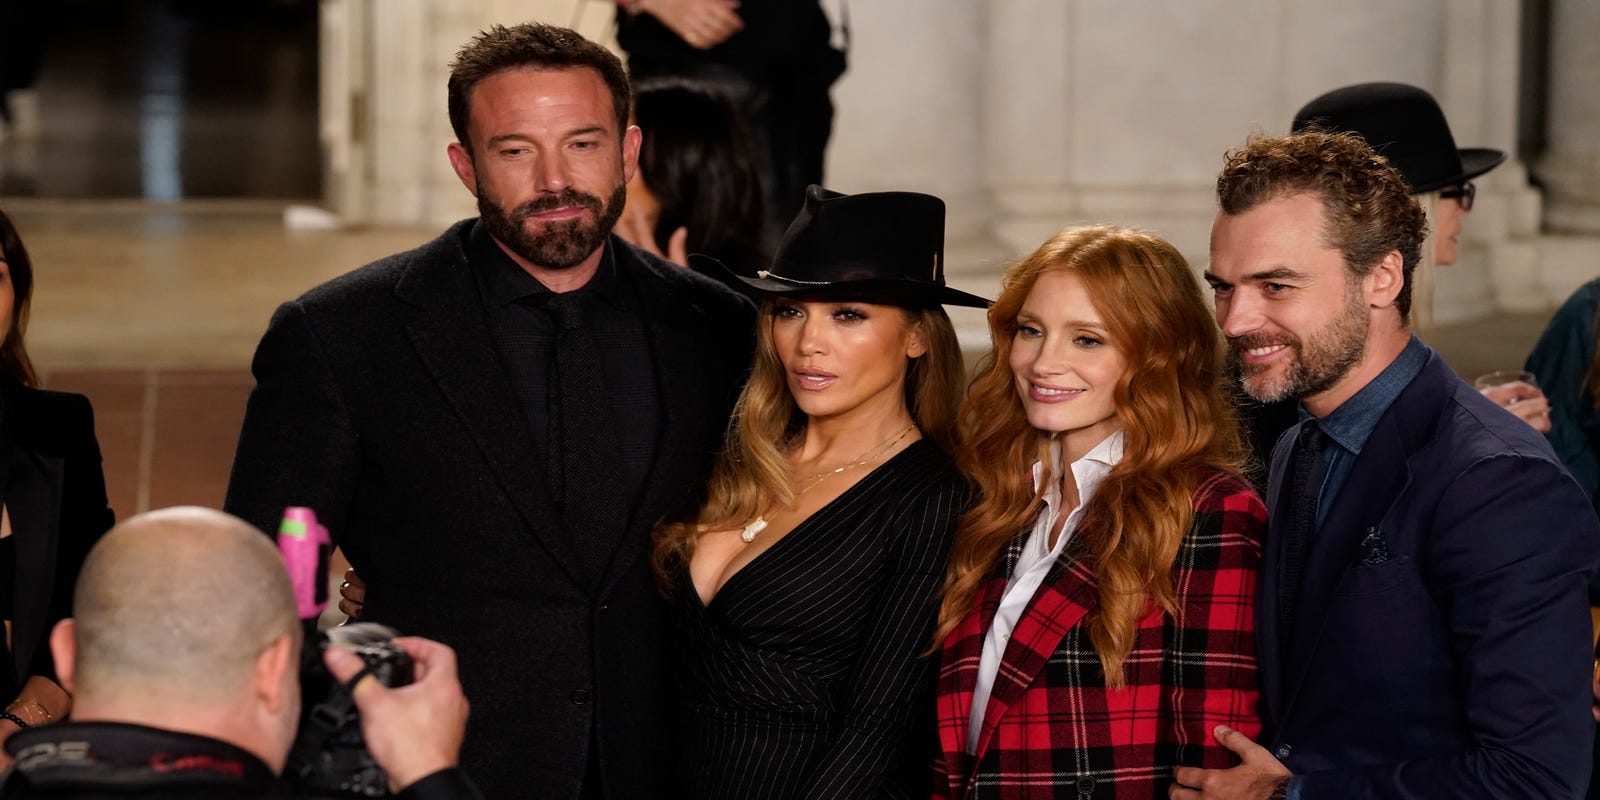 Ralph Lauren fashion show brings JLo, Ben Affleck, more stars to LA